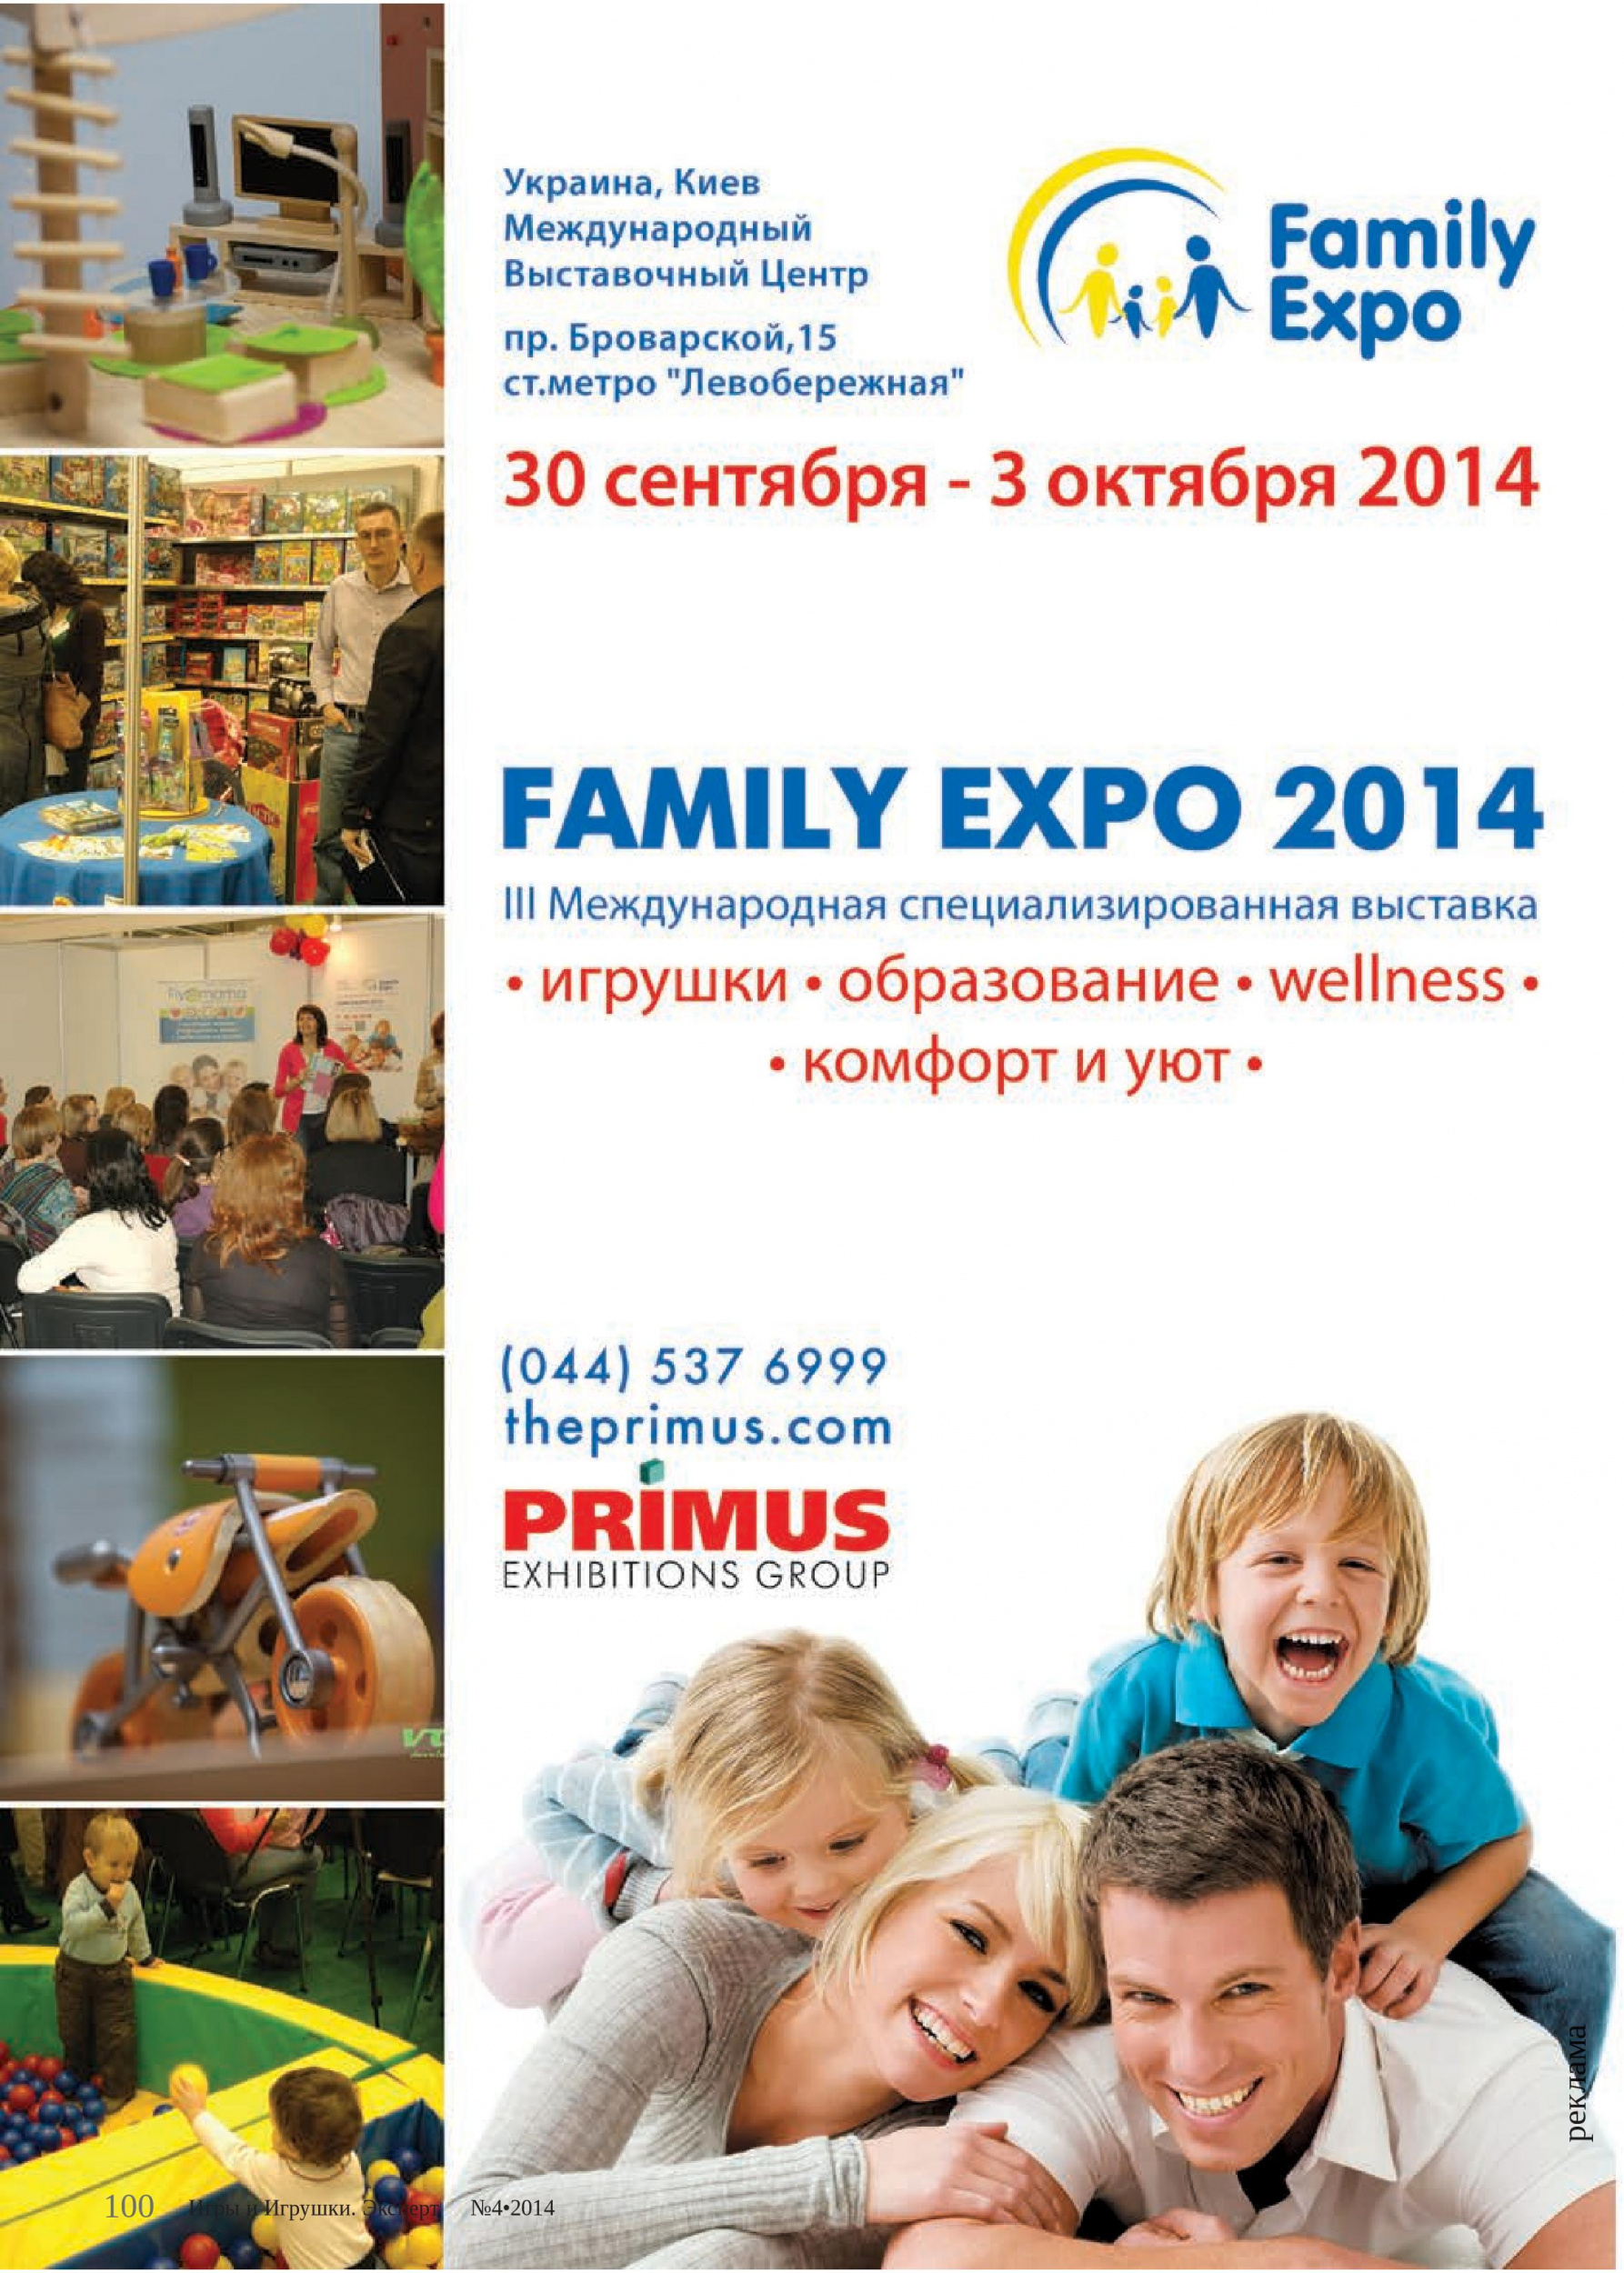 Выставка Family Expo 2014 